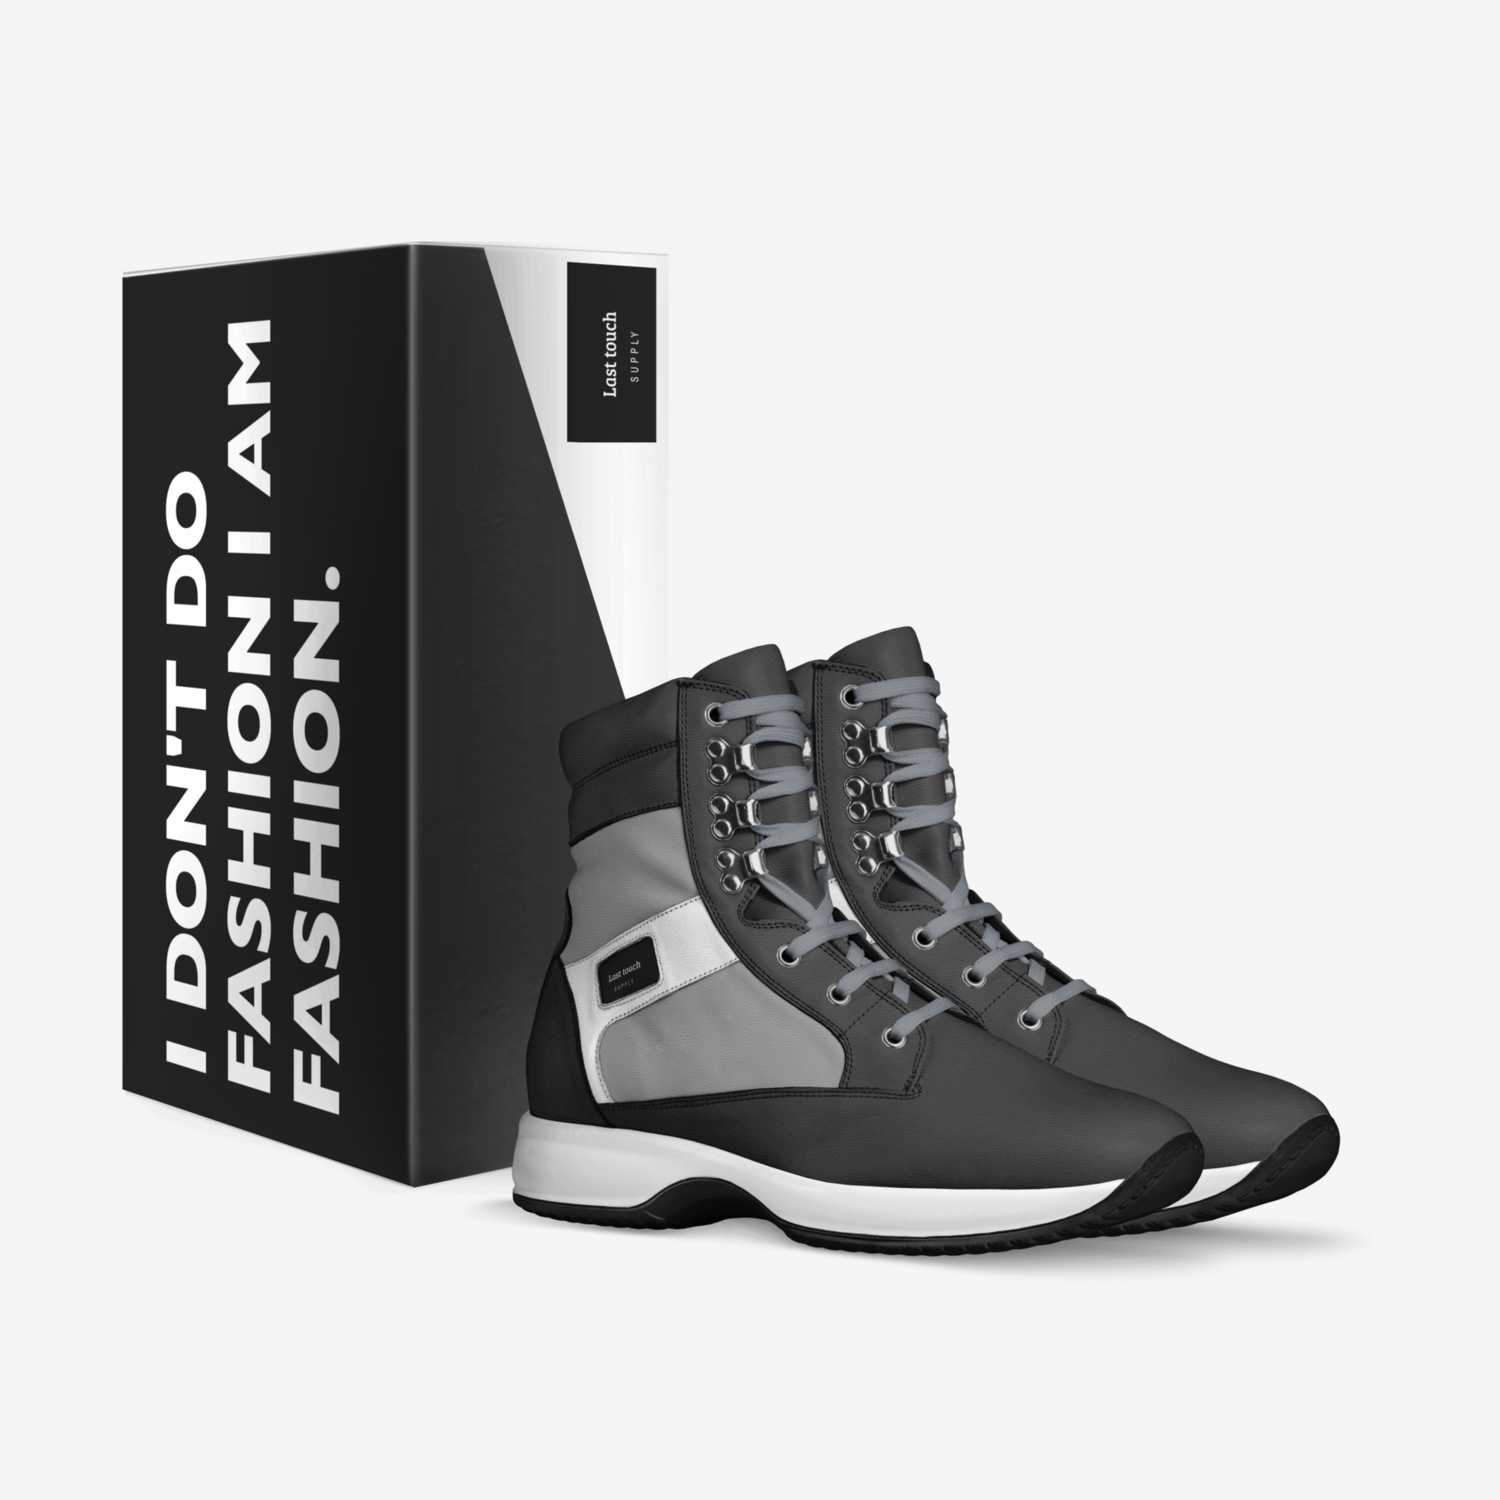 Last touch custom made in Italy shoes by Arkadiusz Zieliński | Box view